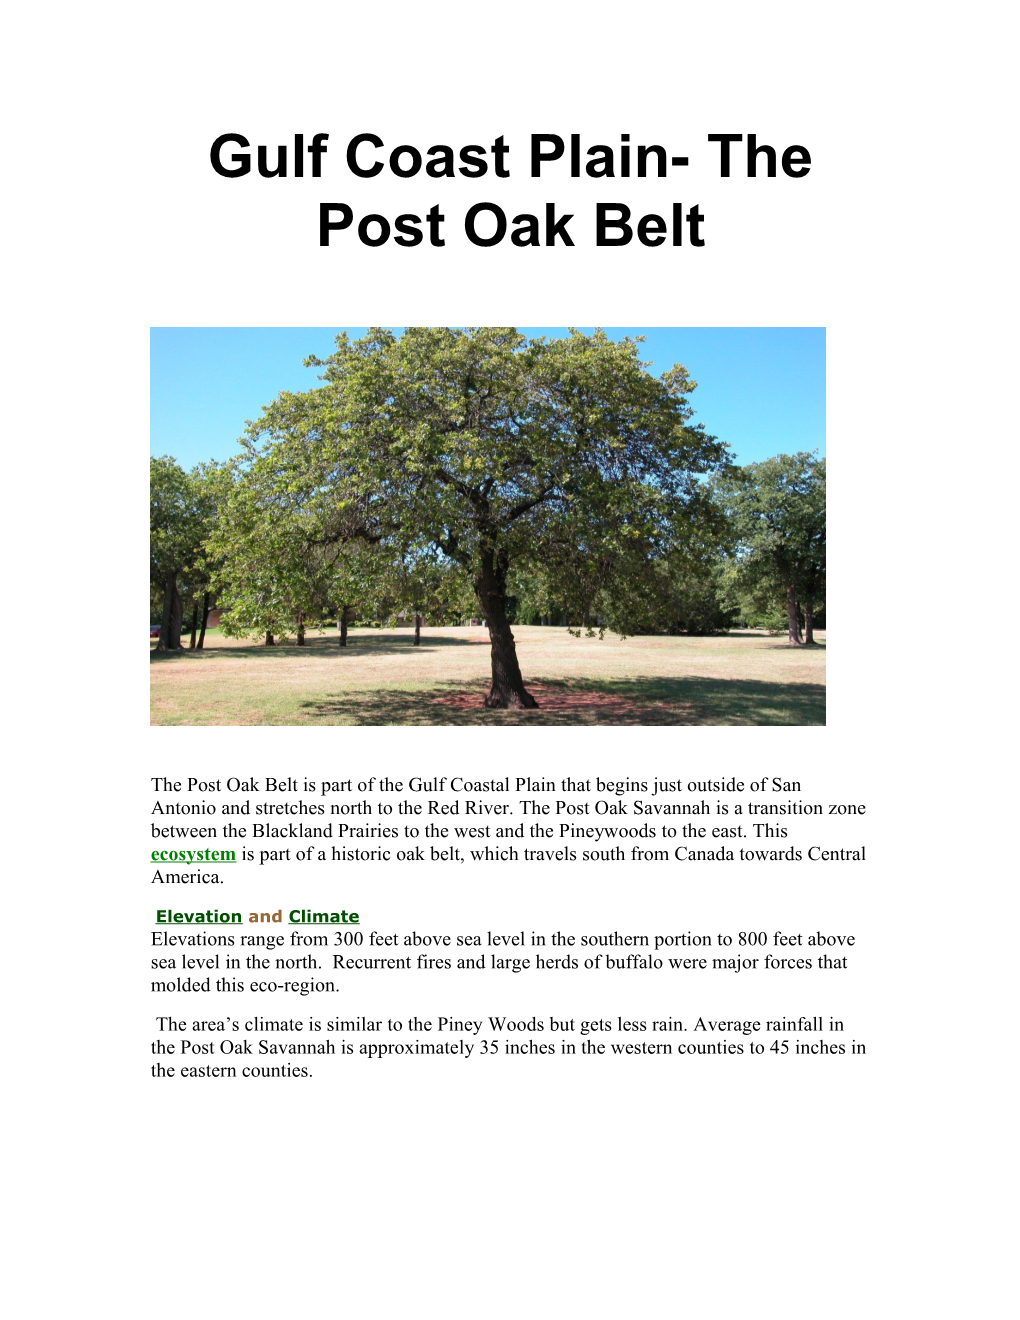 Gulf Coast Plain- the Post Oak Belt